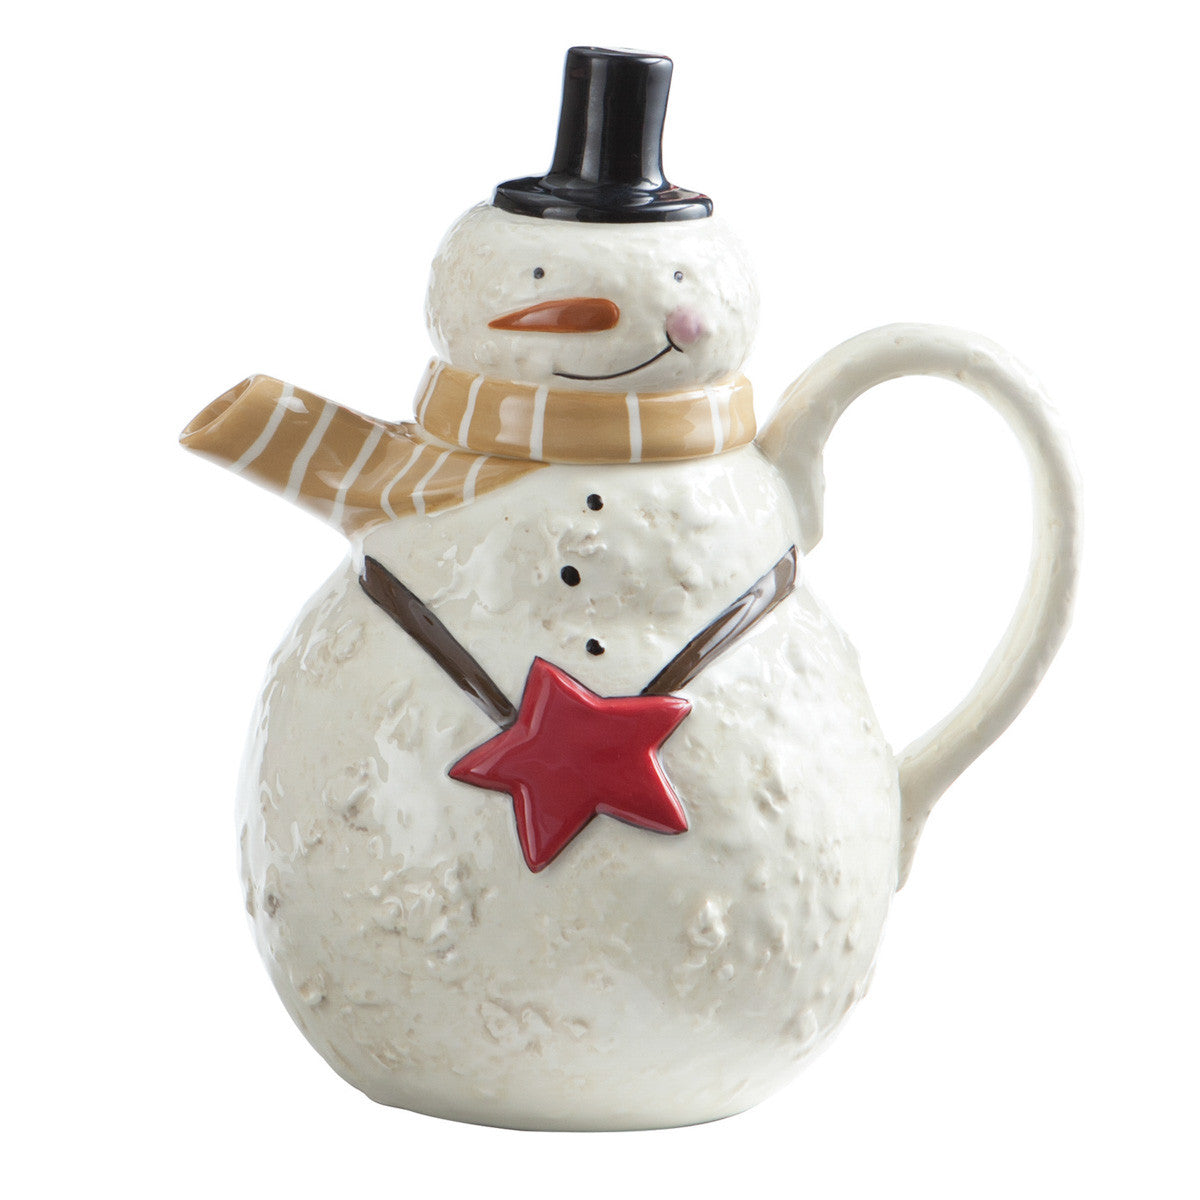 Snow Friends Snowman Ceramic Teapot